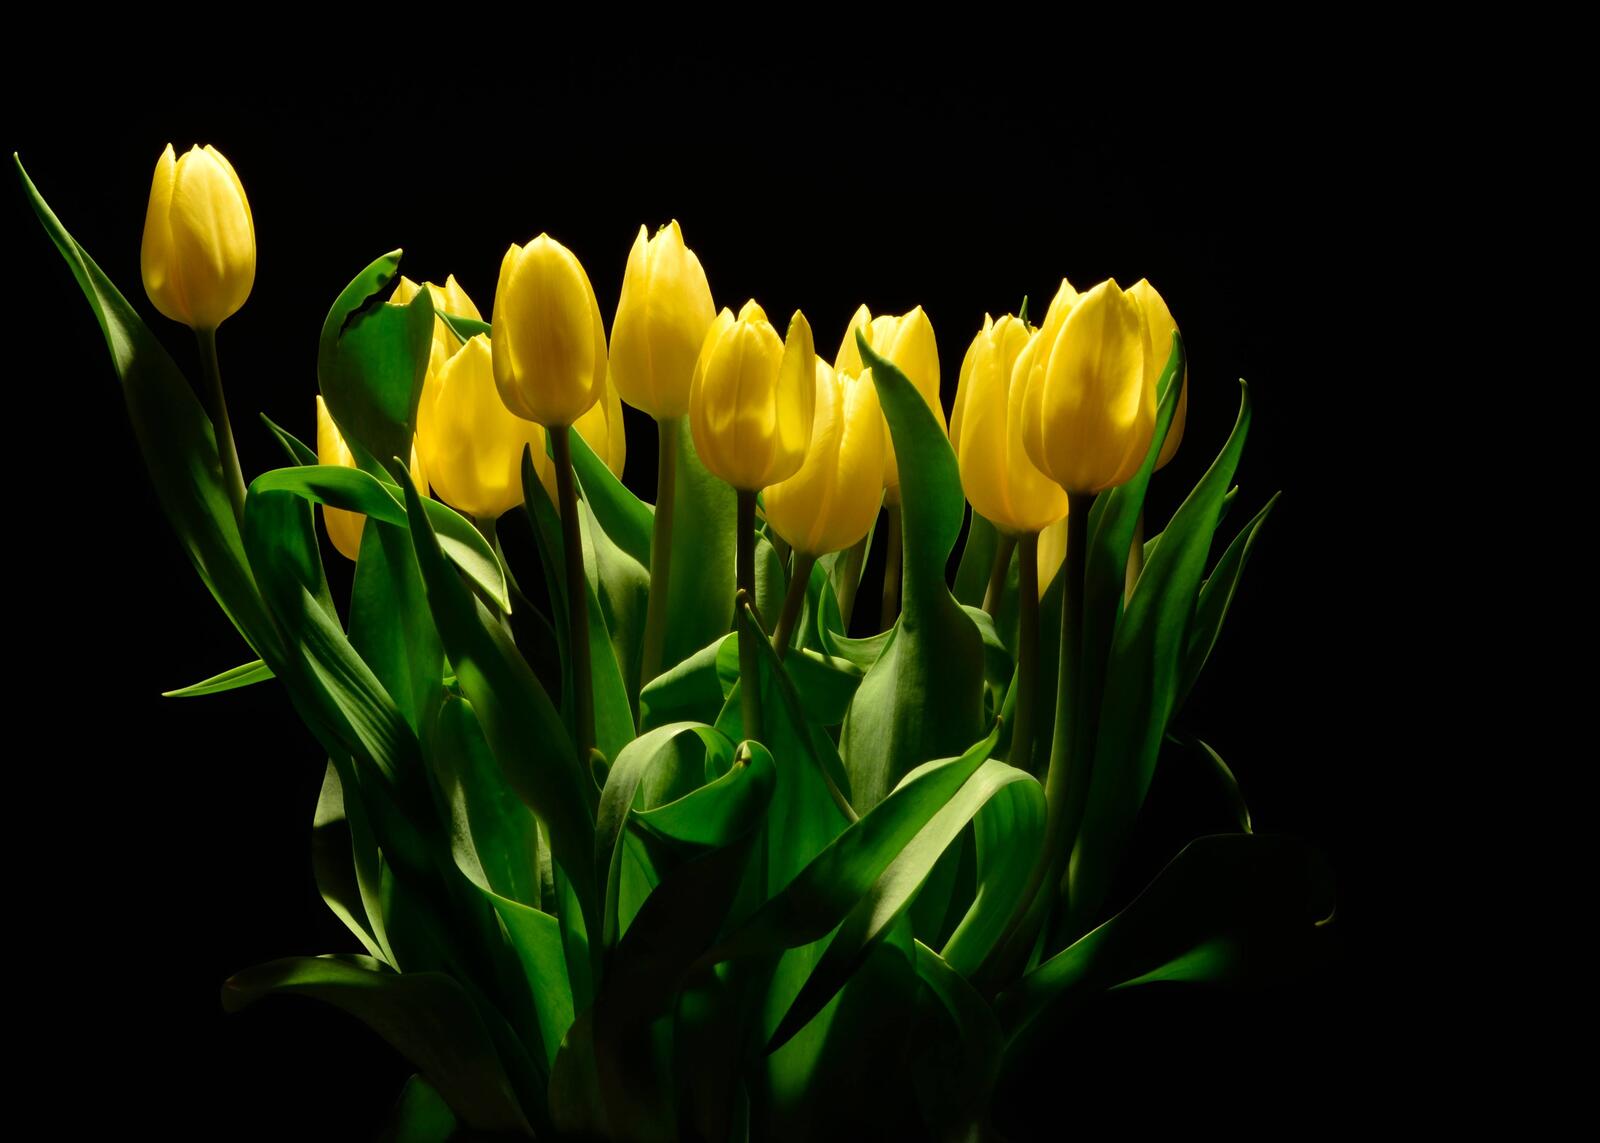 Wallpapers yellow buds tulips yellow tulips on the desktop